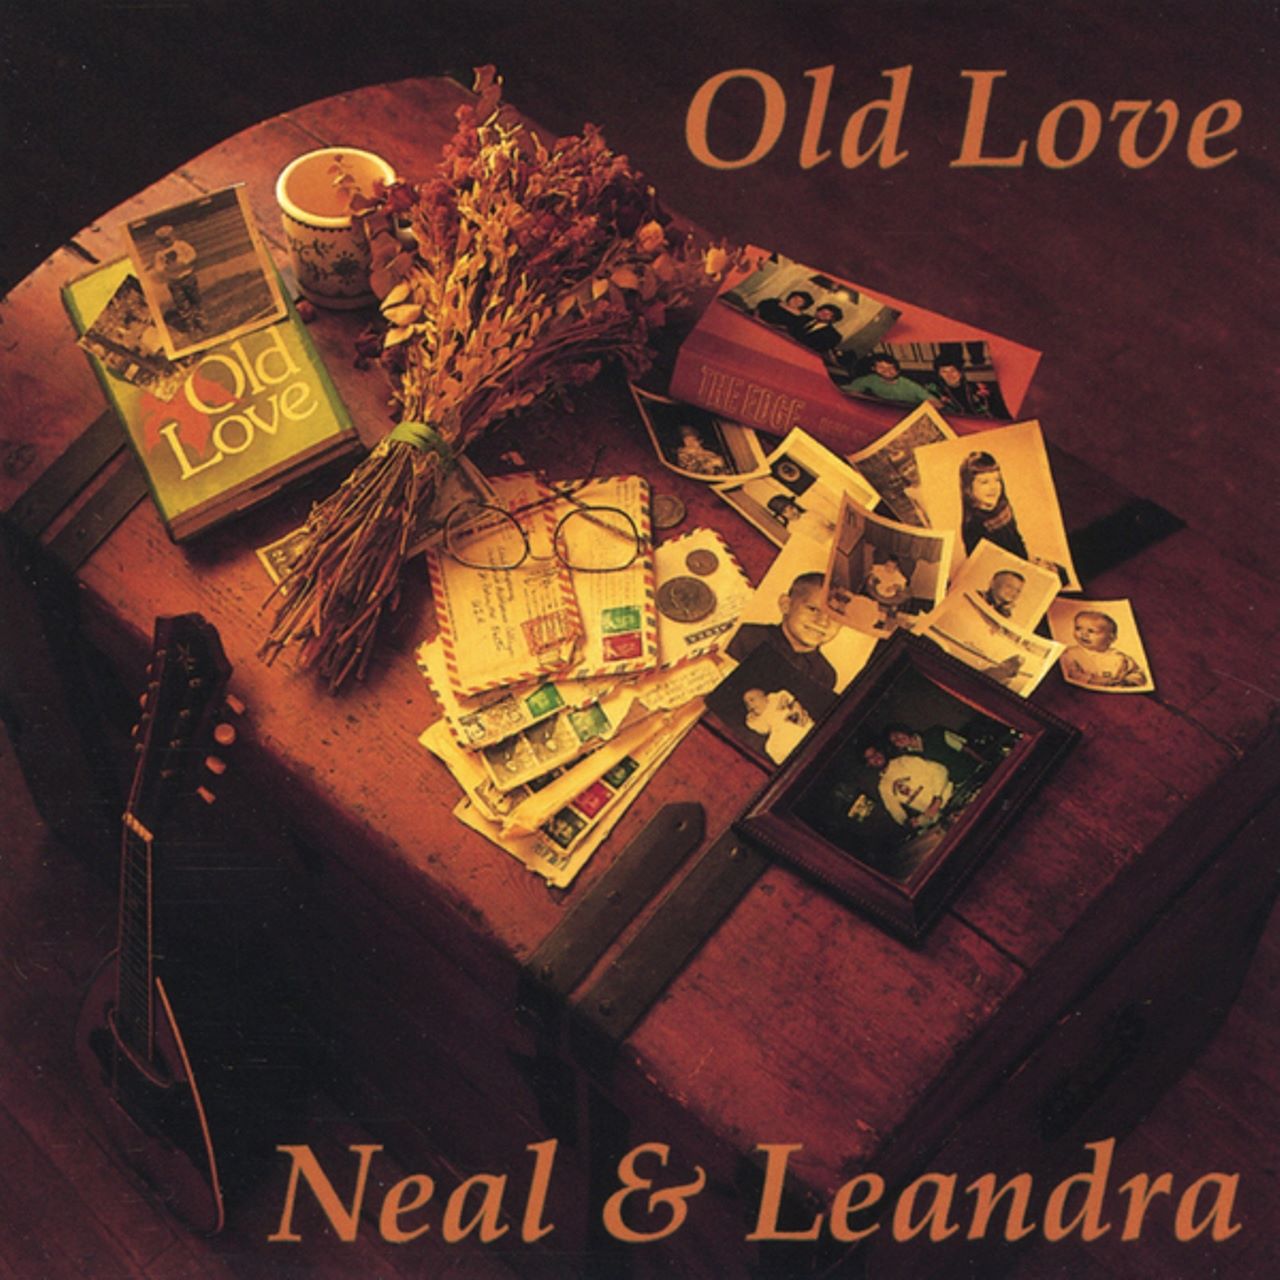 Neal & Leandra - Old Love cover album